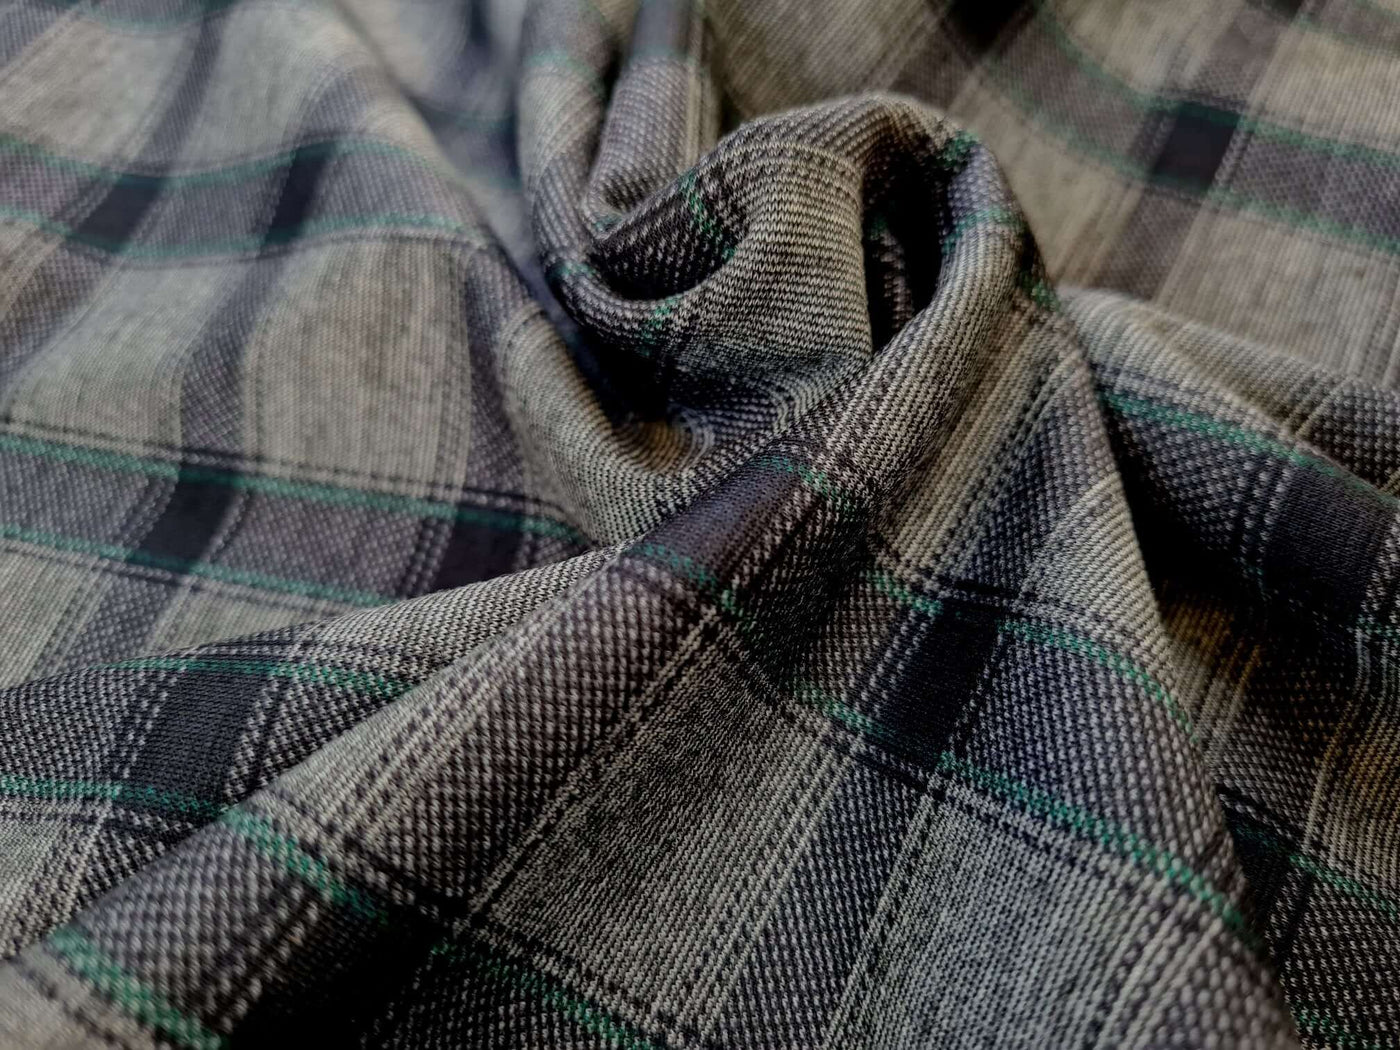 Double knit Ponte Roma jersey grey, navy, green tartan dress fabric.